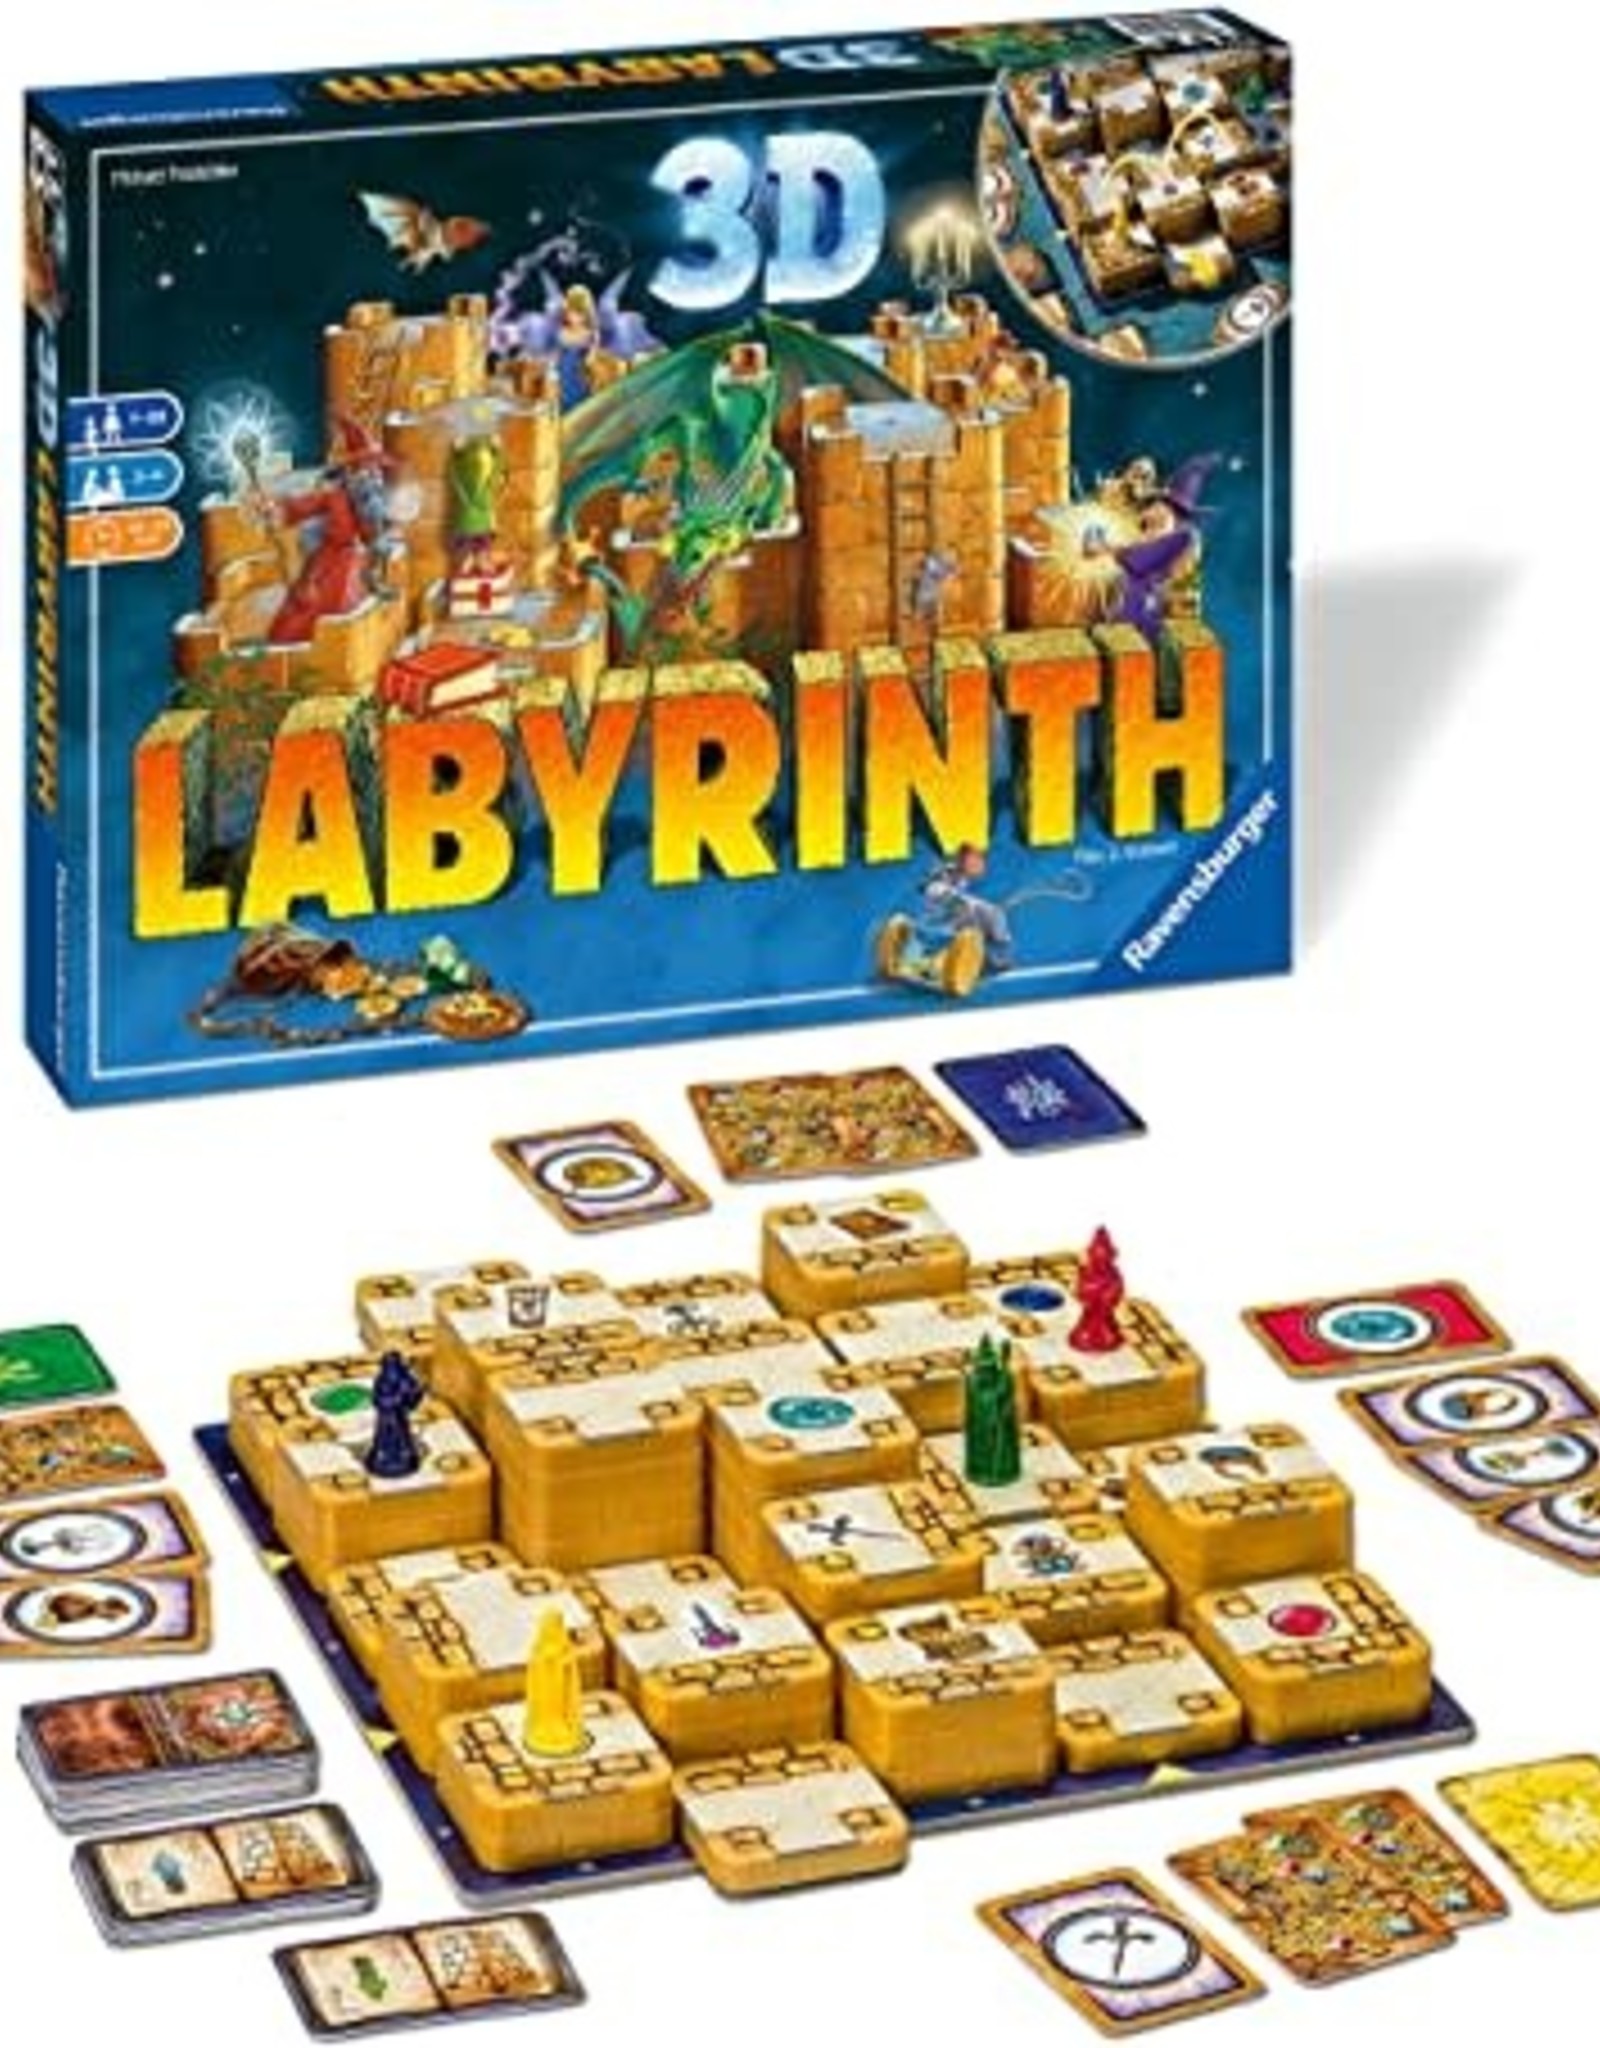 Ravensburger Labyrinth 3D